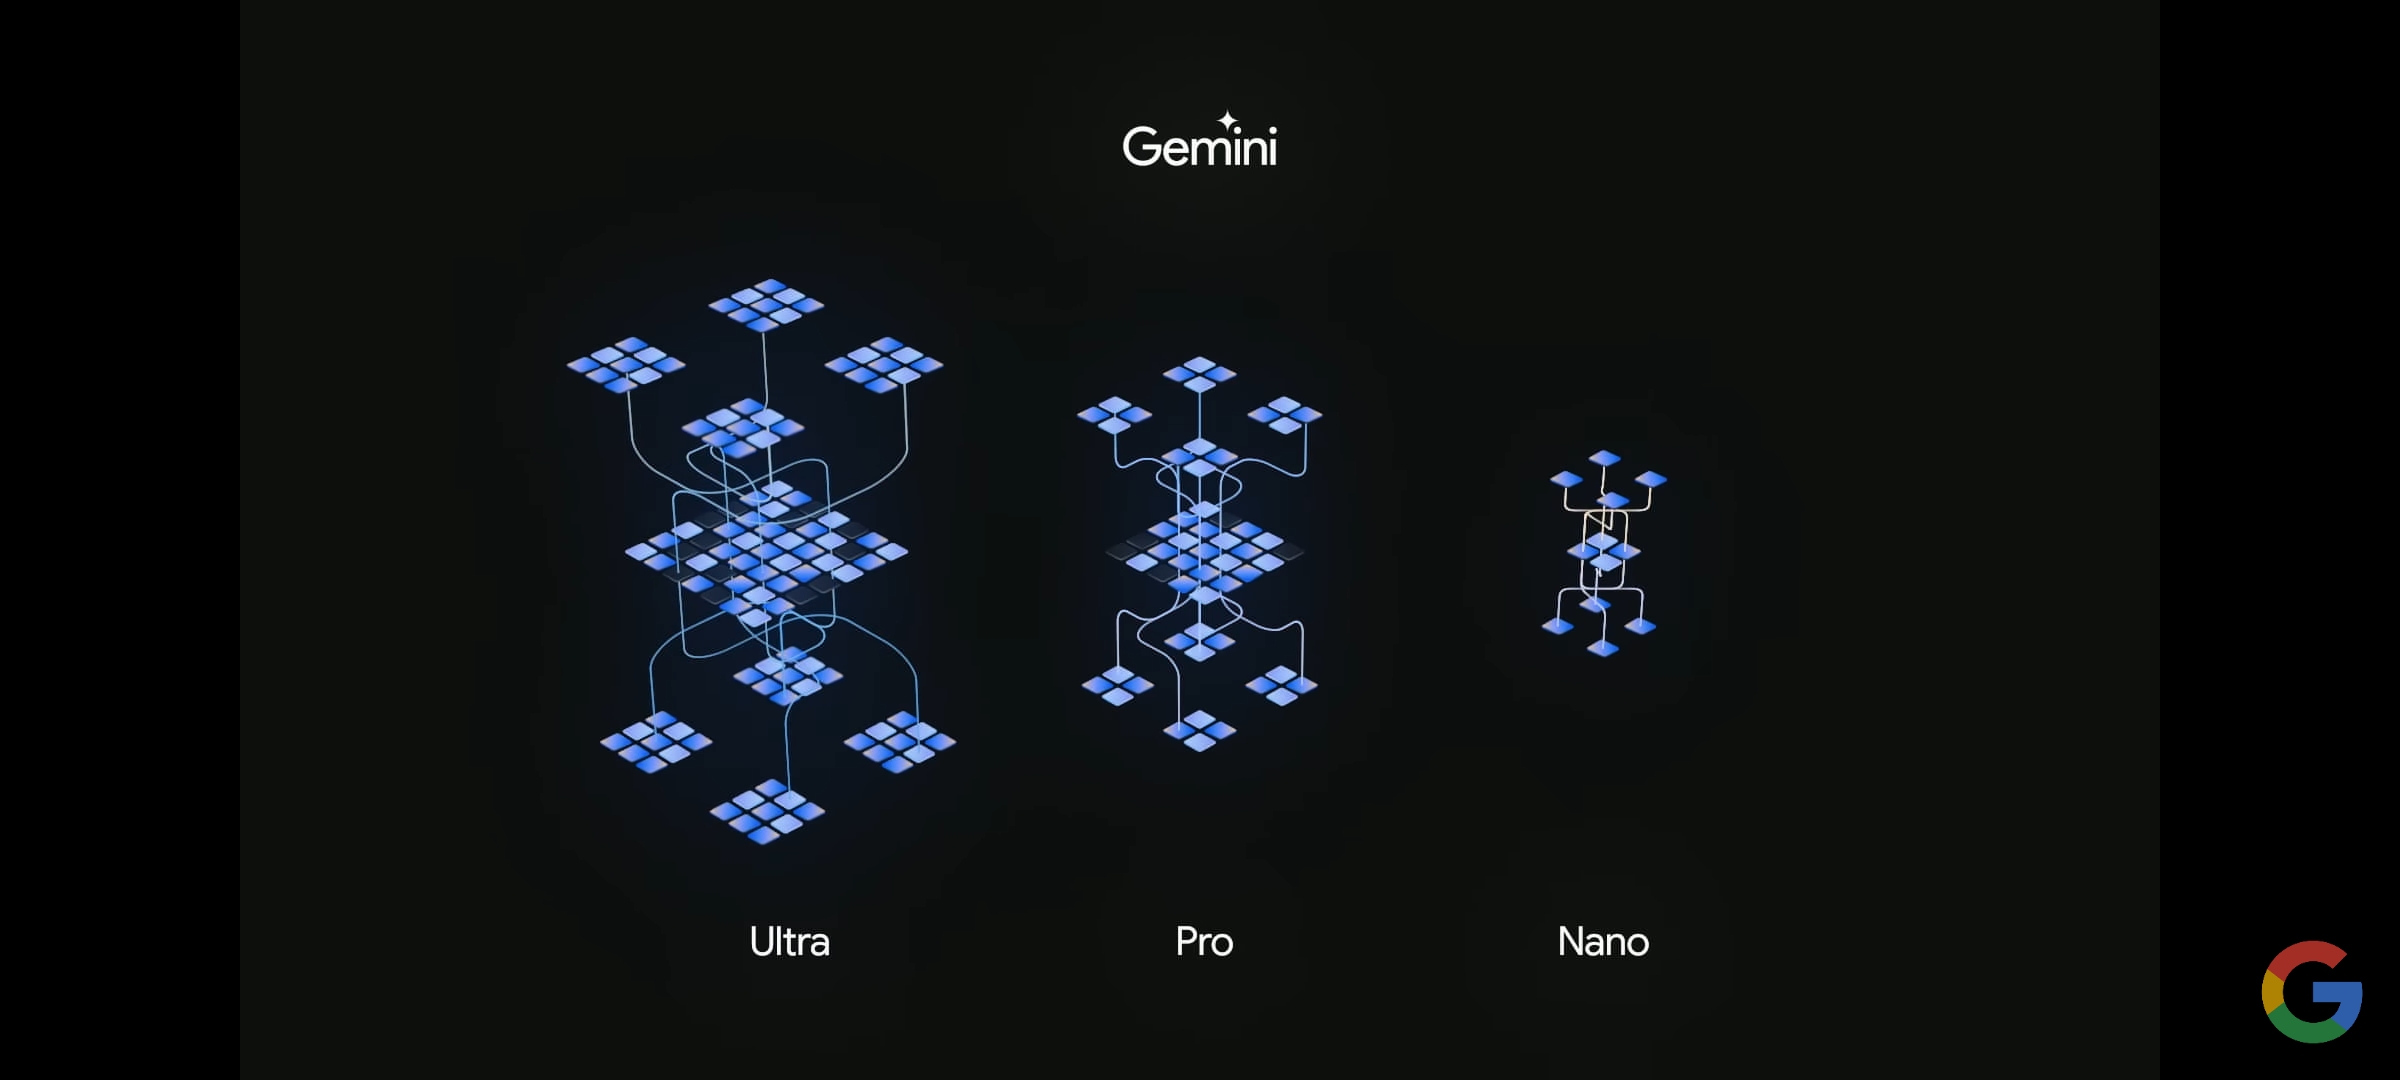 سه مدل هوش مصنوعی Gemini